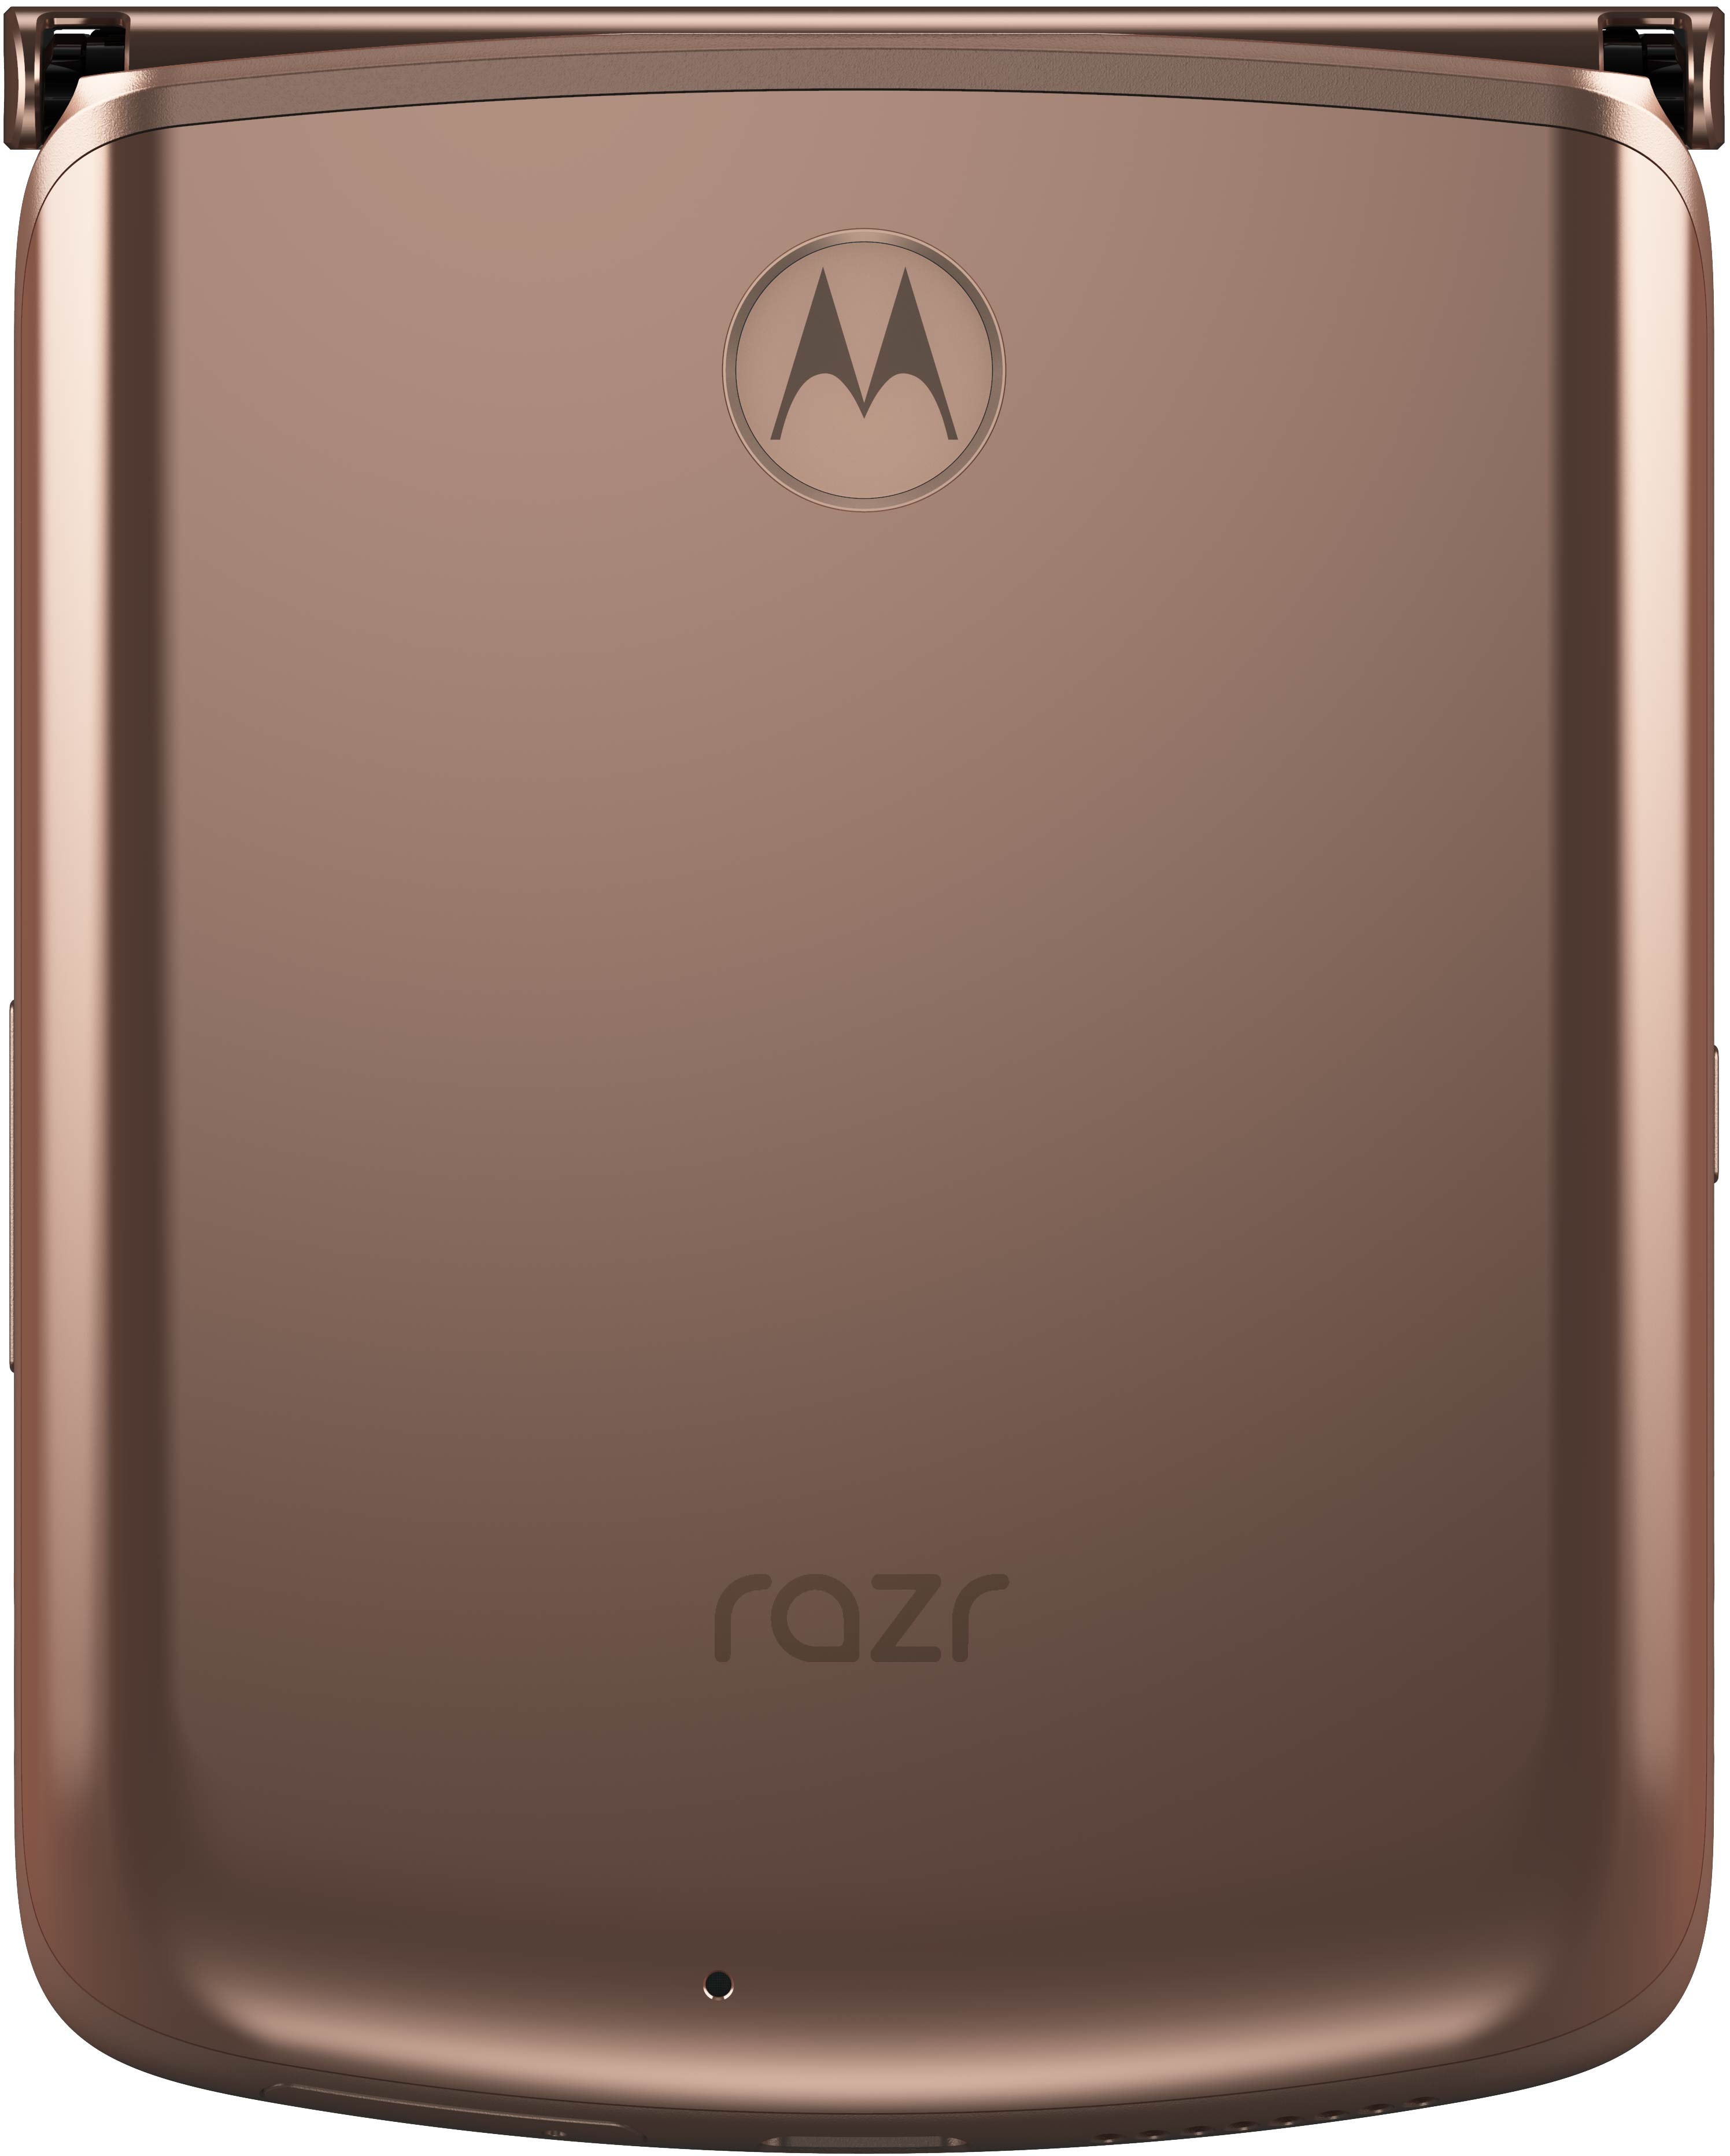 Back View: Motorola - MT7711 24x8 DOCSIS 3.0 Modem + AC1900 Router for Xfinity Internet & Voice - Black